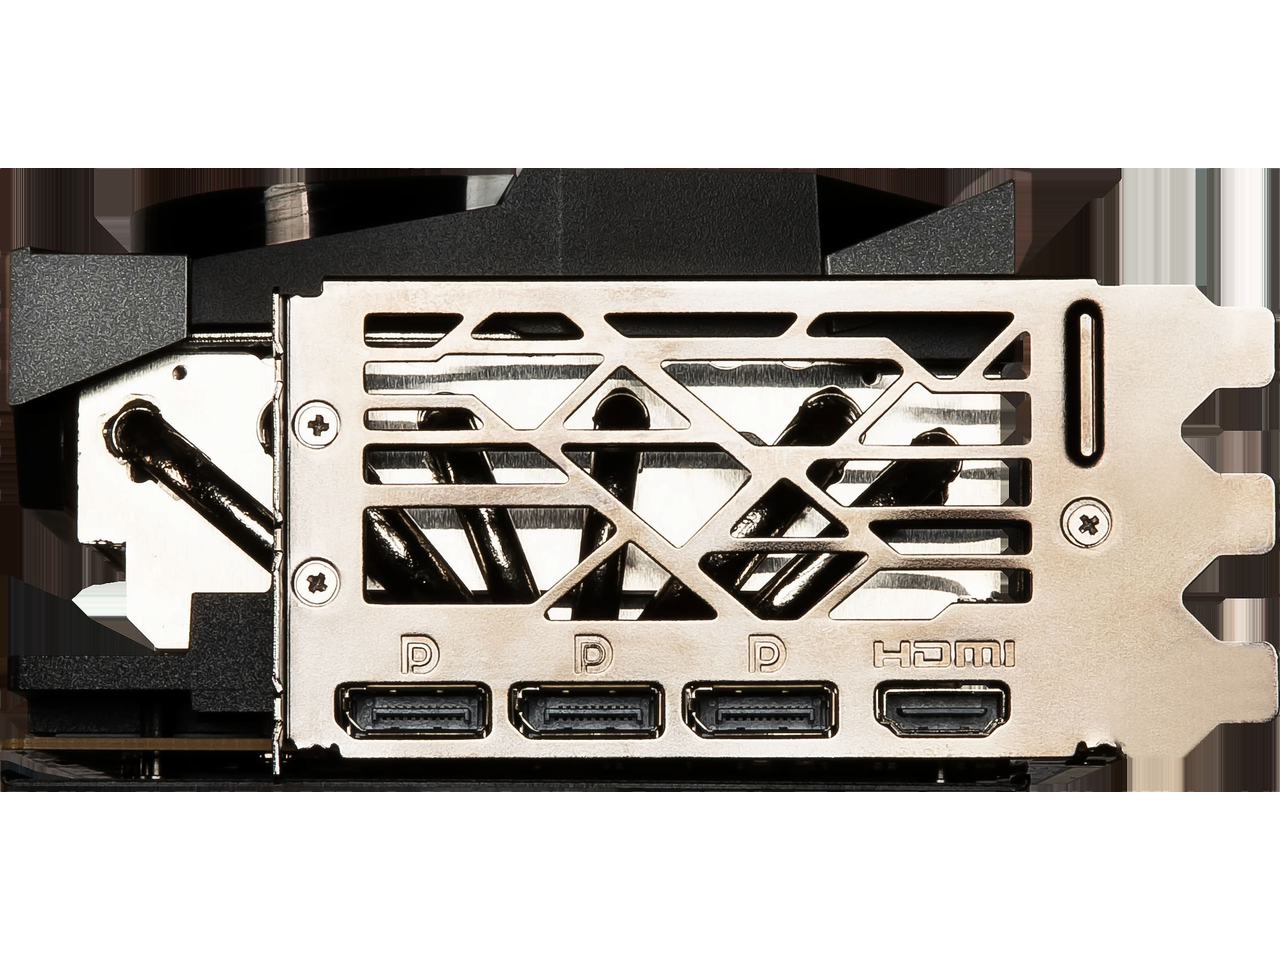 MSI Gaming (MSI) GeForce RTX 4090 24GB GDDR6X PCI Express 4.0 Video Card RTX 4090 GAMING TRIO 24G